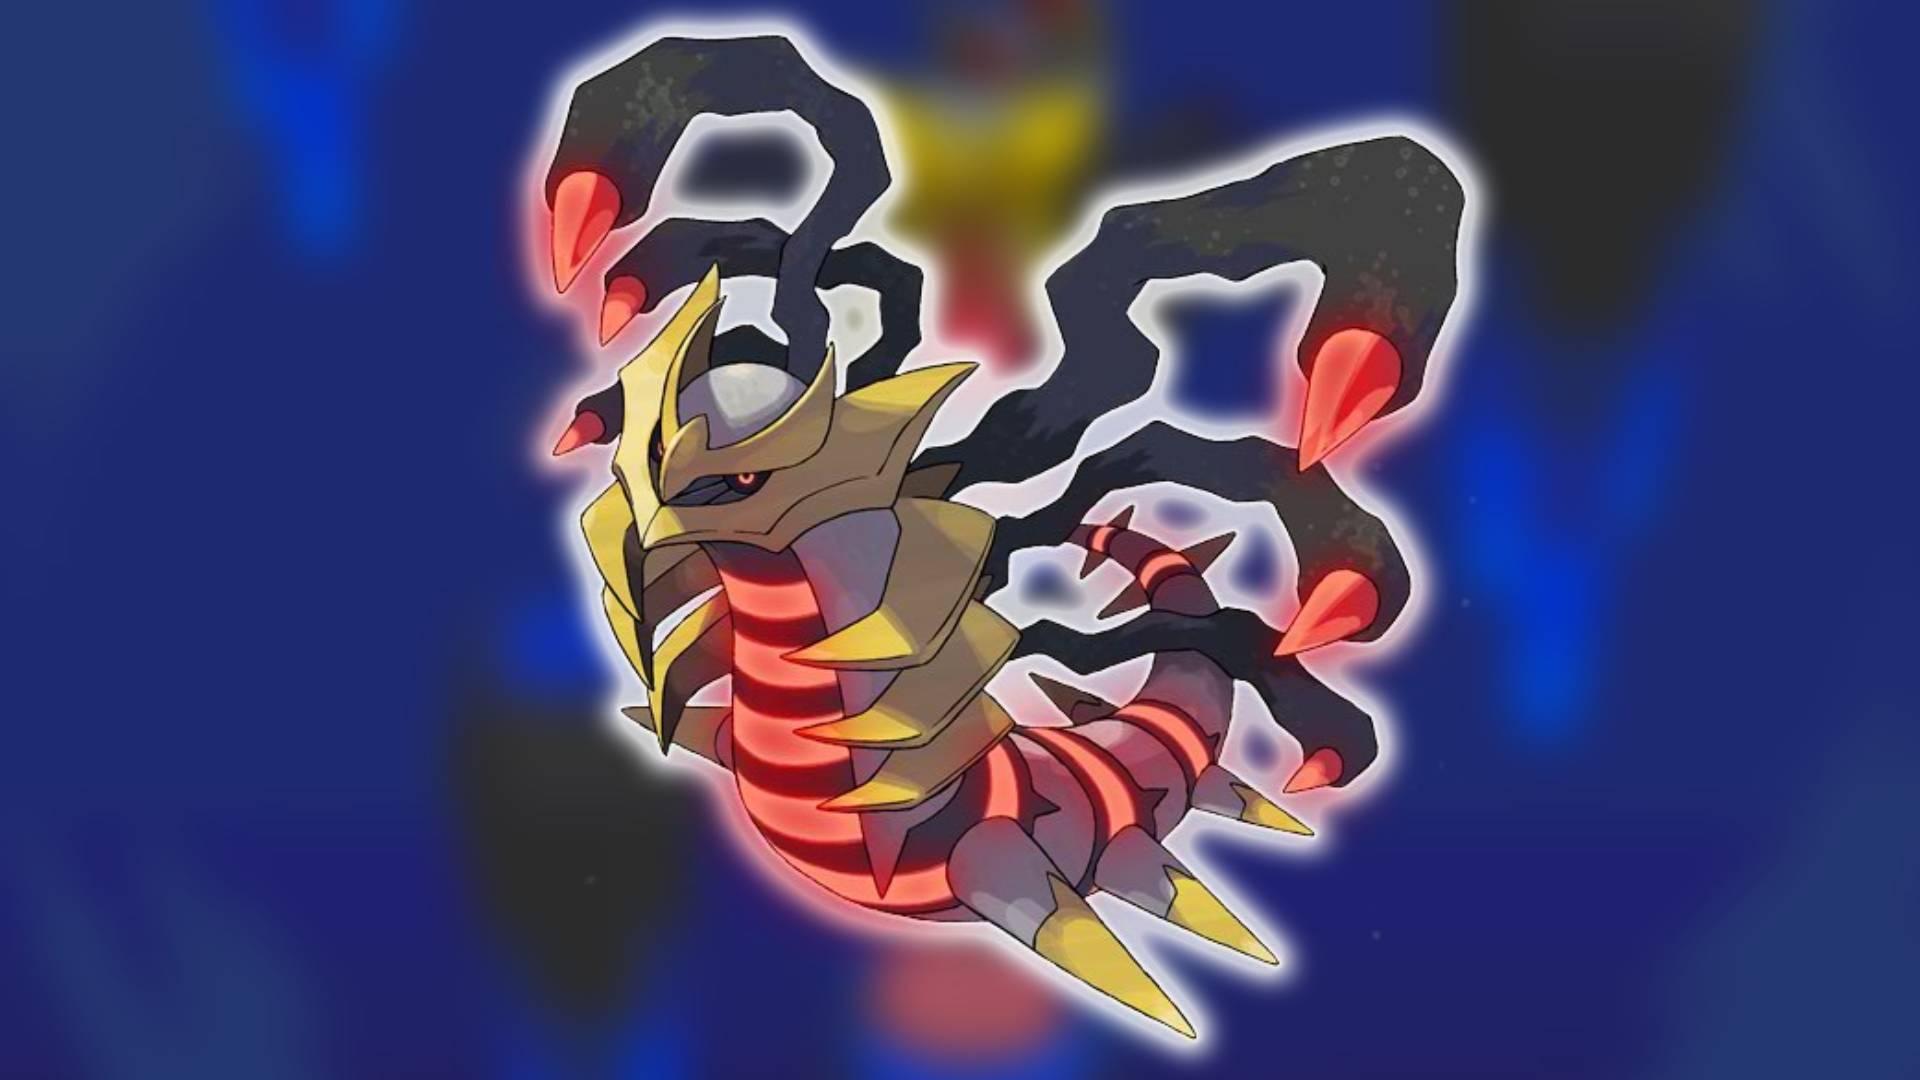 Pokémon GO Shiny Giratina / Giratina (Origin) Level 40 / Level 50